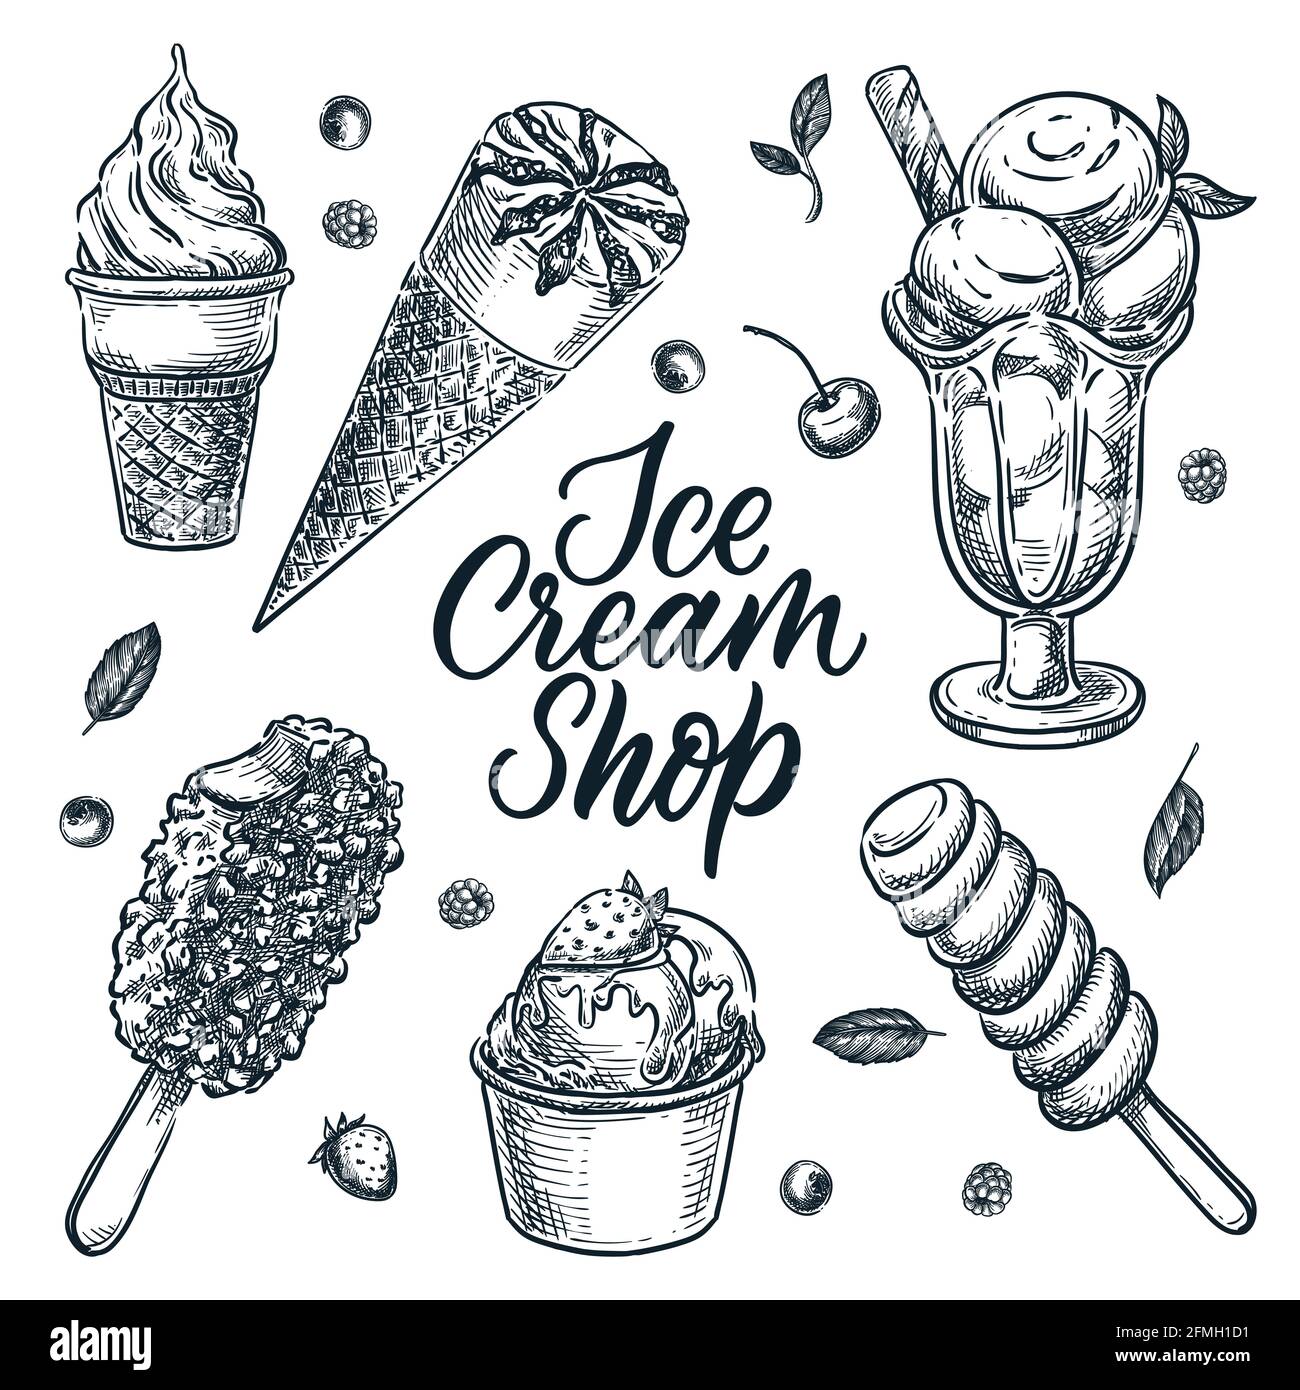 Ice Cream Shop Or Cafe Design Elements Set Isolated On White